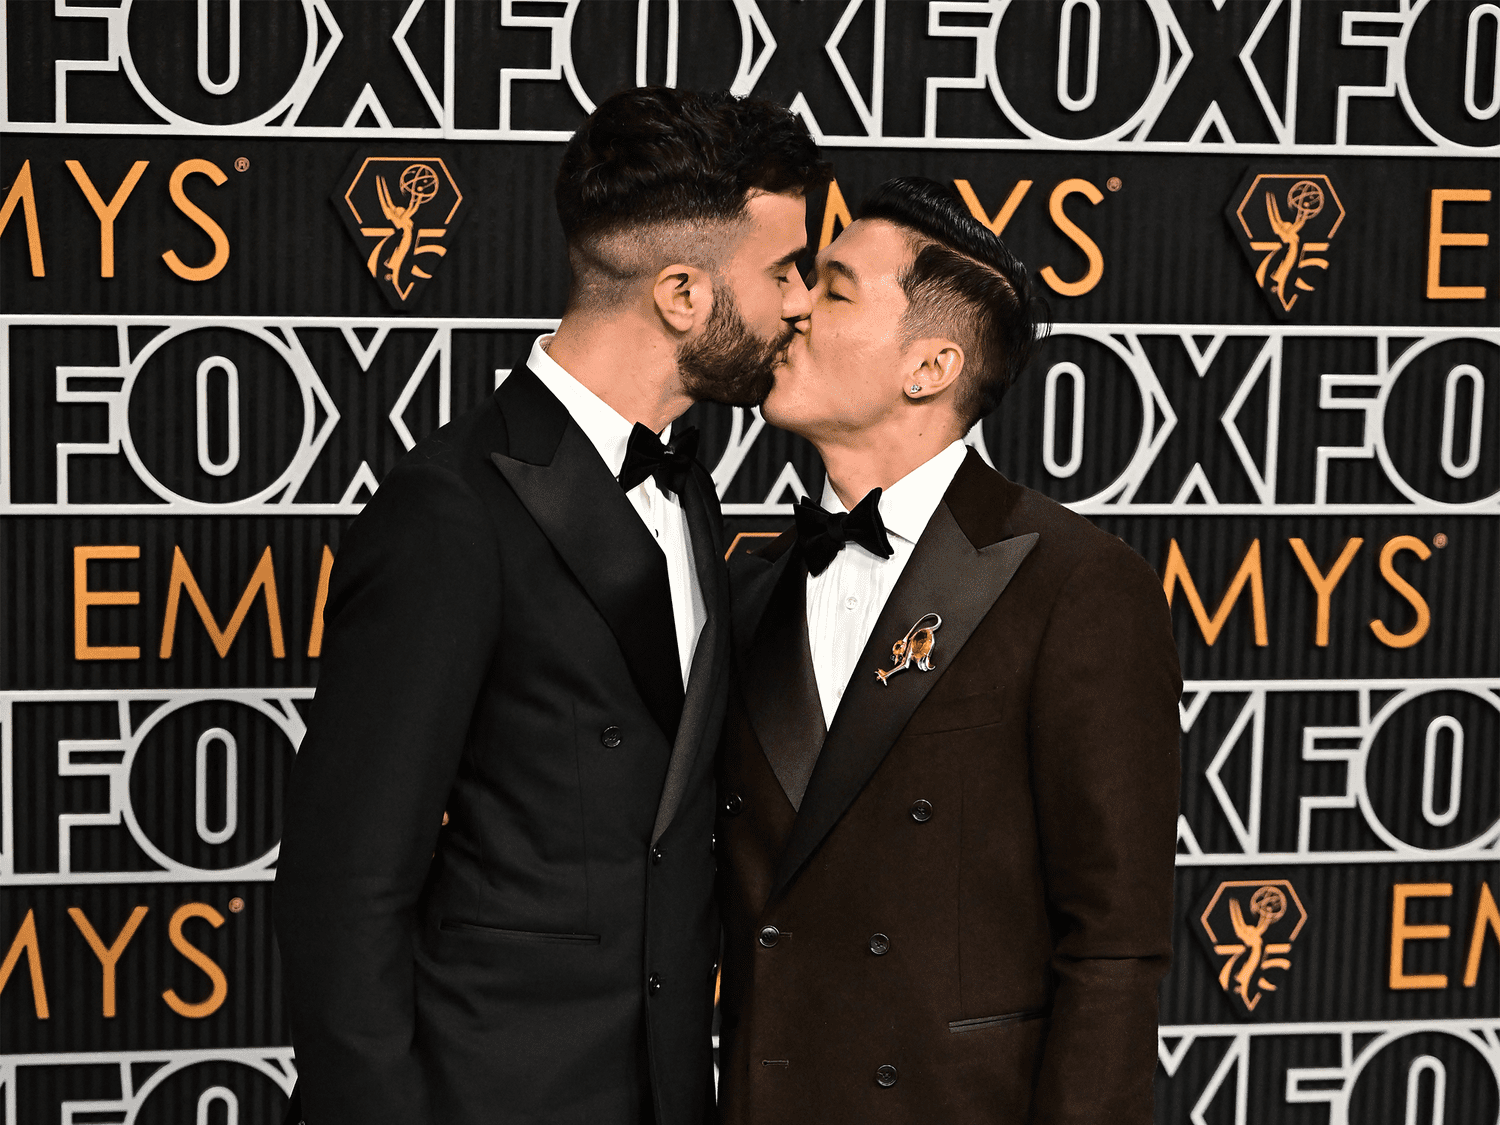 Joel Kim Booster and John-Michael Sudsina kissing on the Emmys red carpet